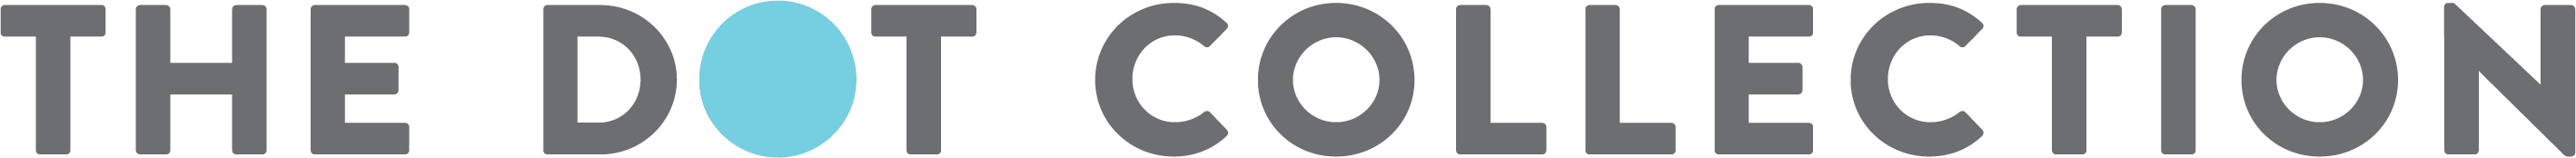 The Dot Collection logo